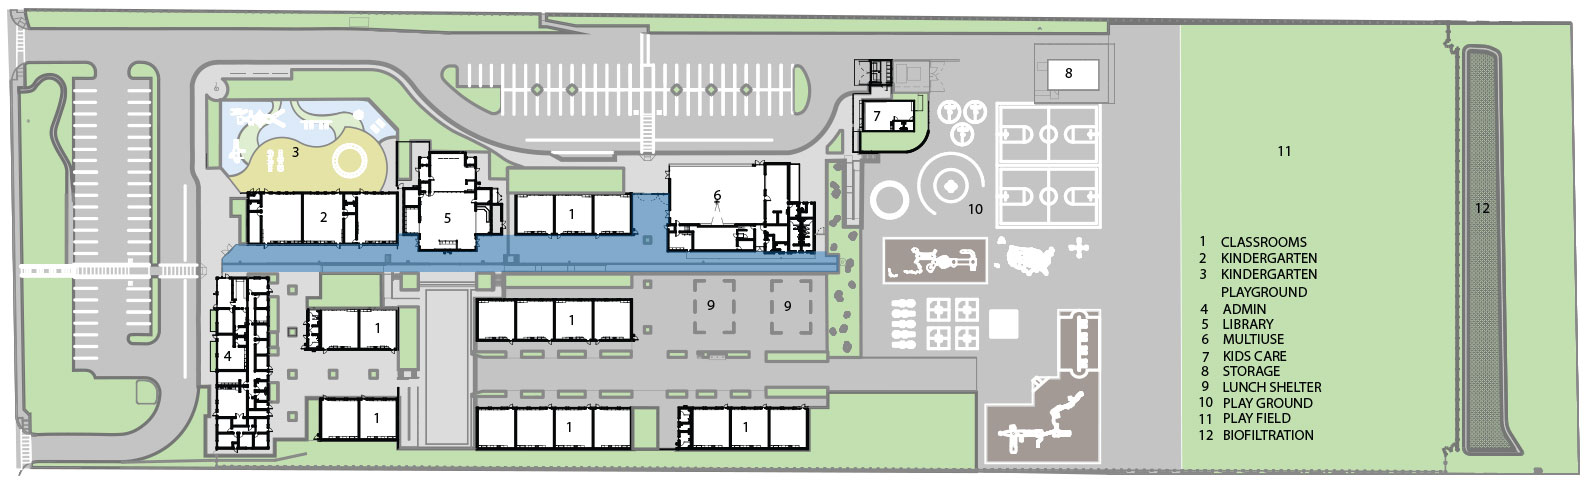 Site plan of Irene Snow Elementary